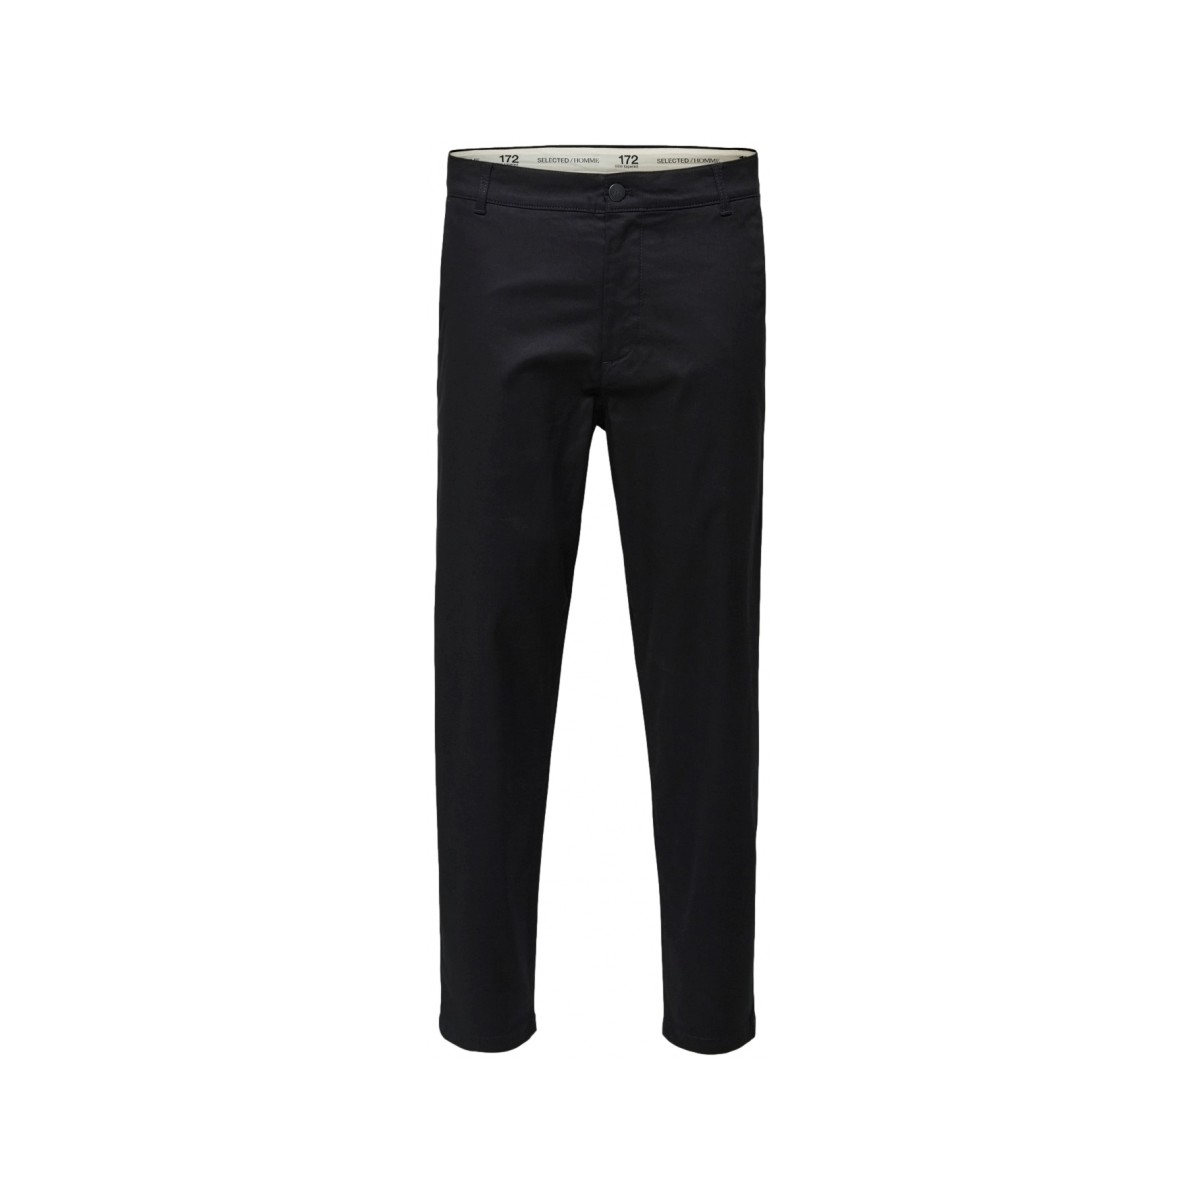 textil Hombre Pantalones Selected Slim Tape Repton 172 Flex Pants - Black Negro